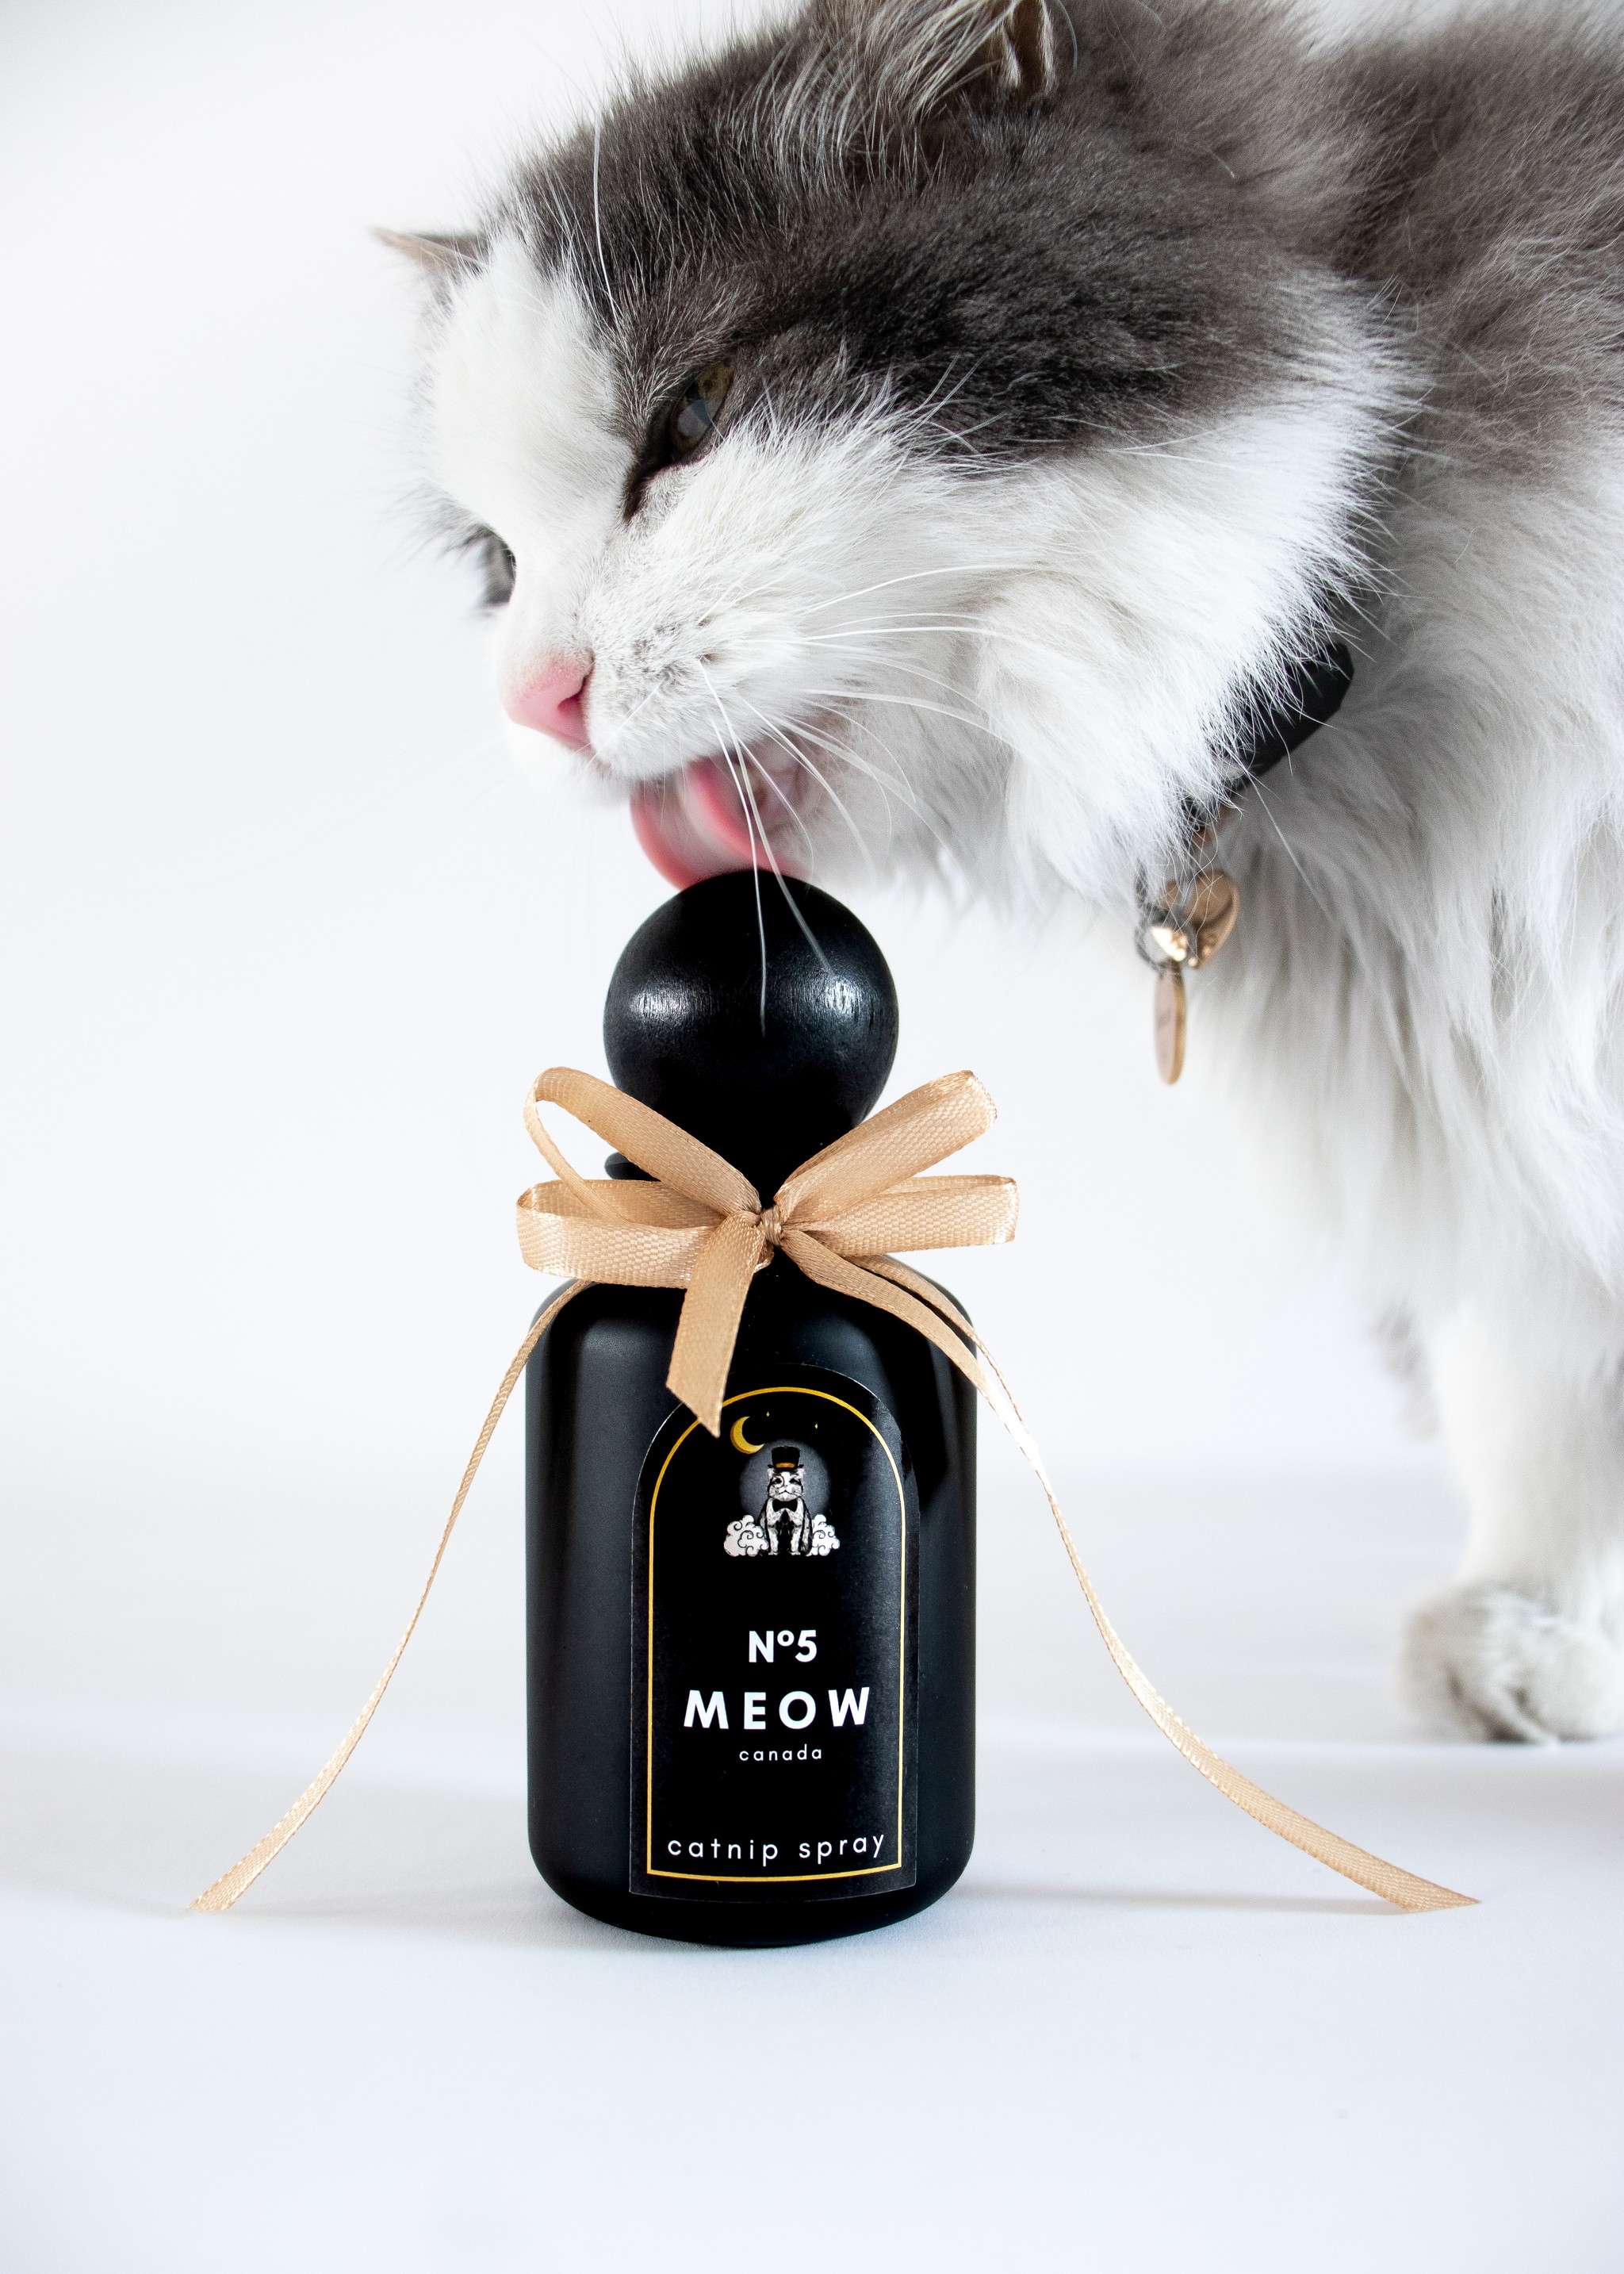 simon-cat-licking-cat-nip-spray-perfume.jpg